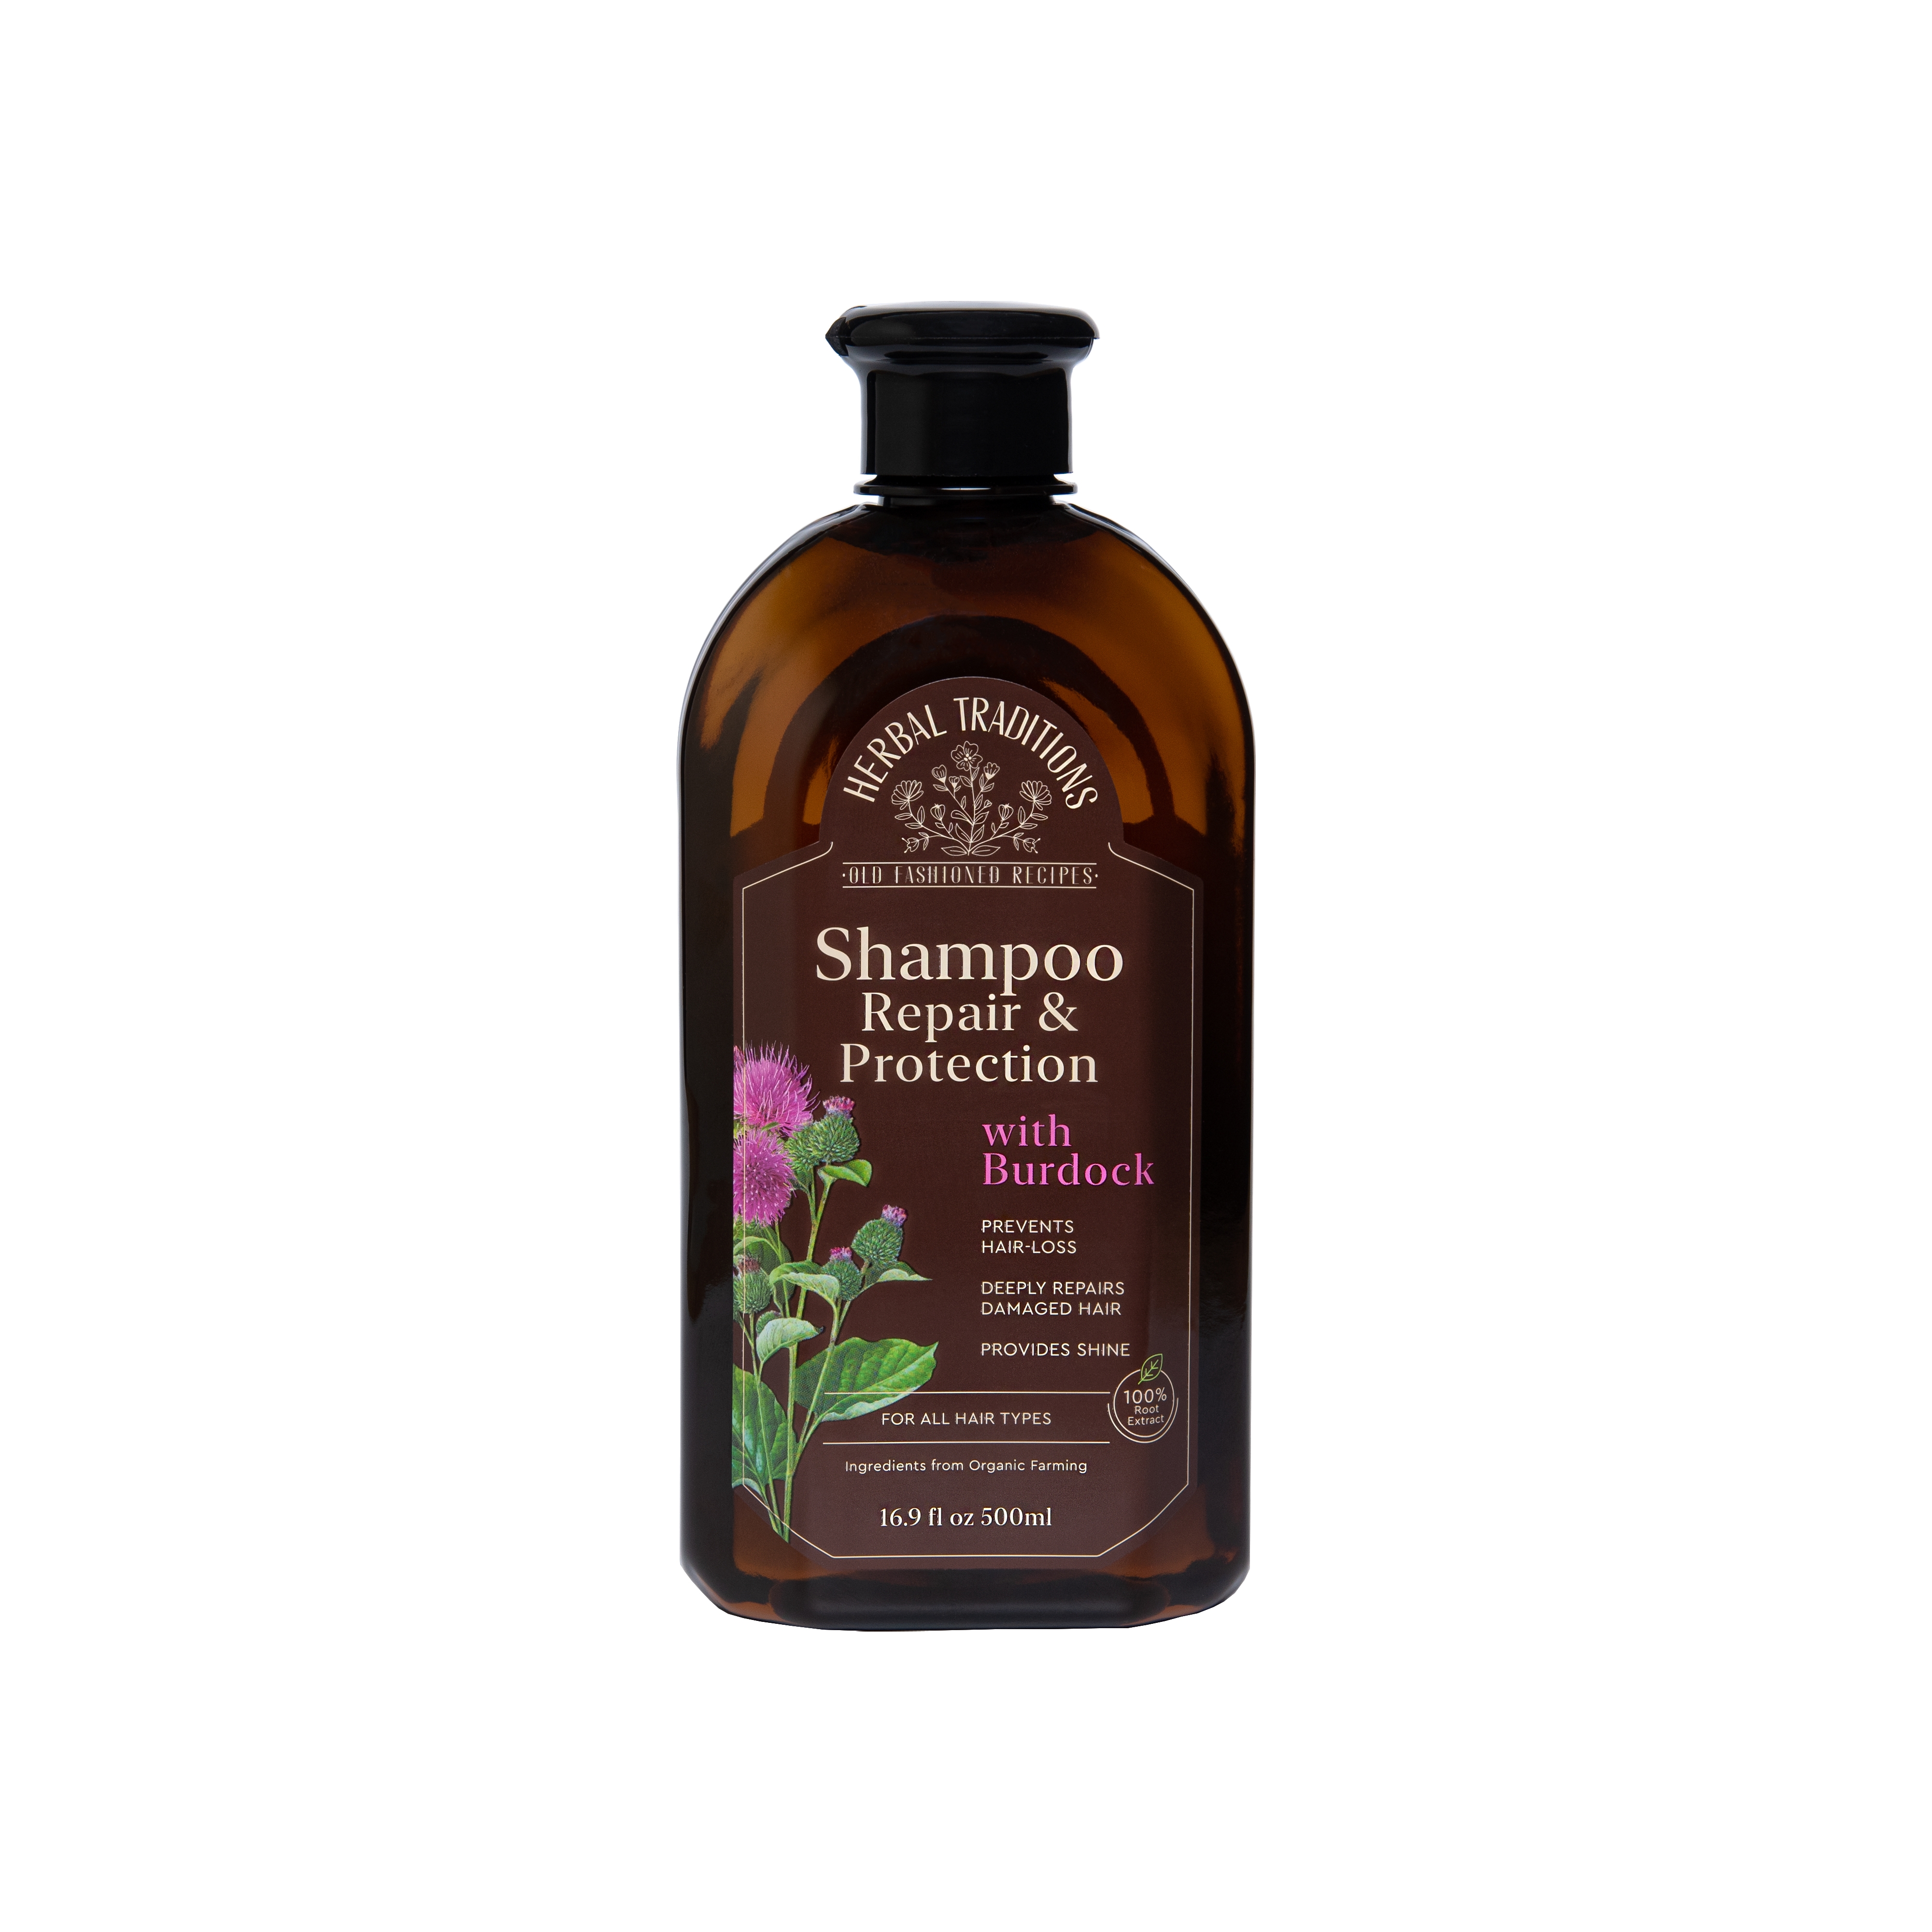 herbs szampon wizaz